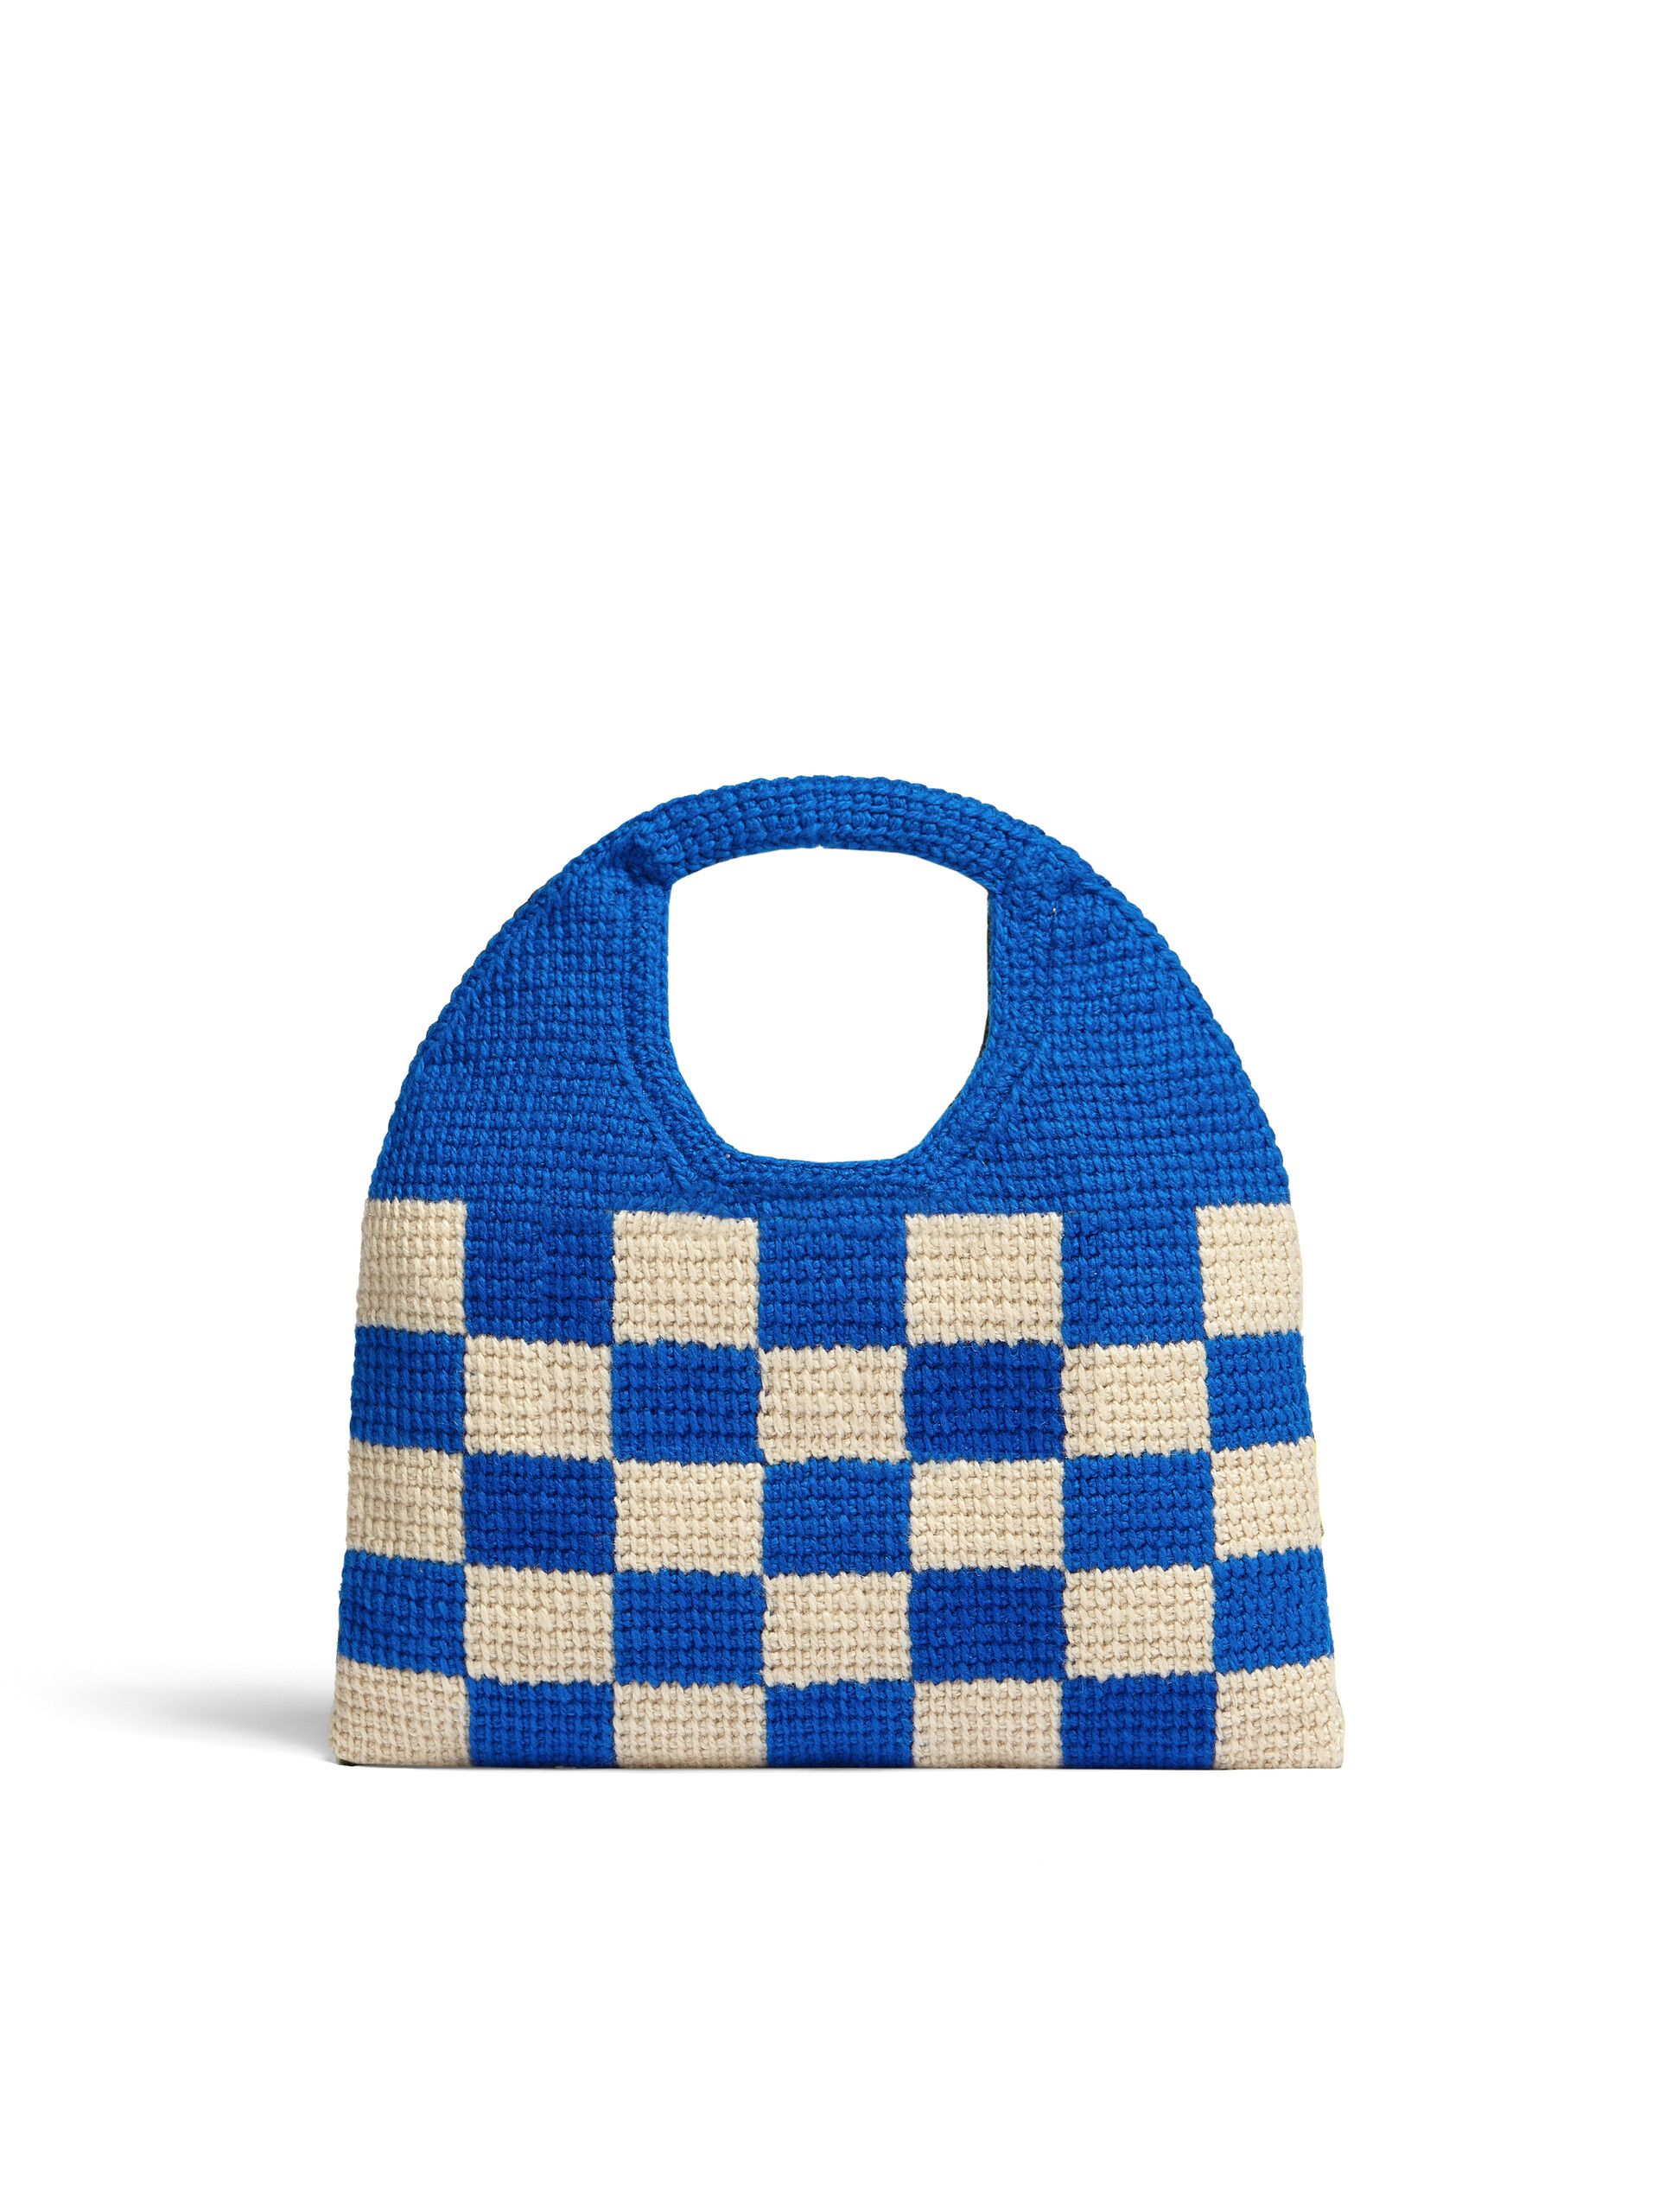 MARNI MARKET DOUBLE tech wool bag - Shopping Bags - Image 3